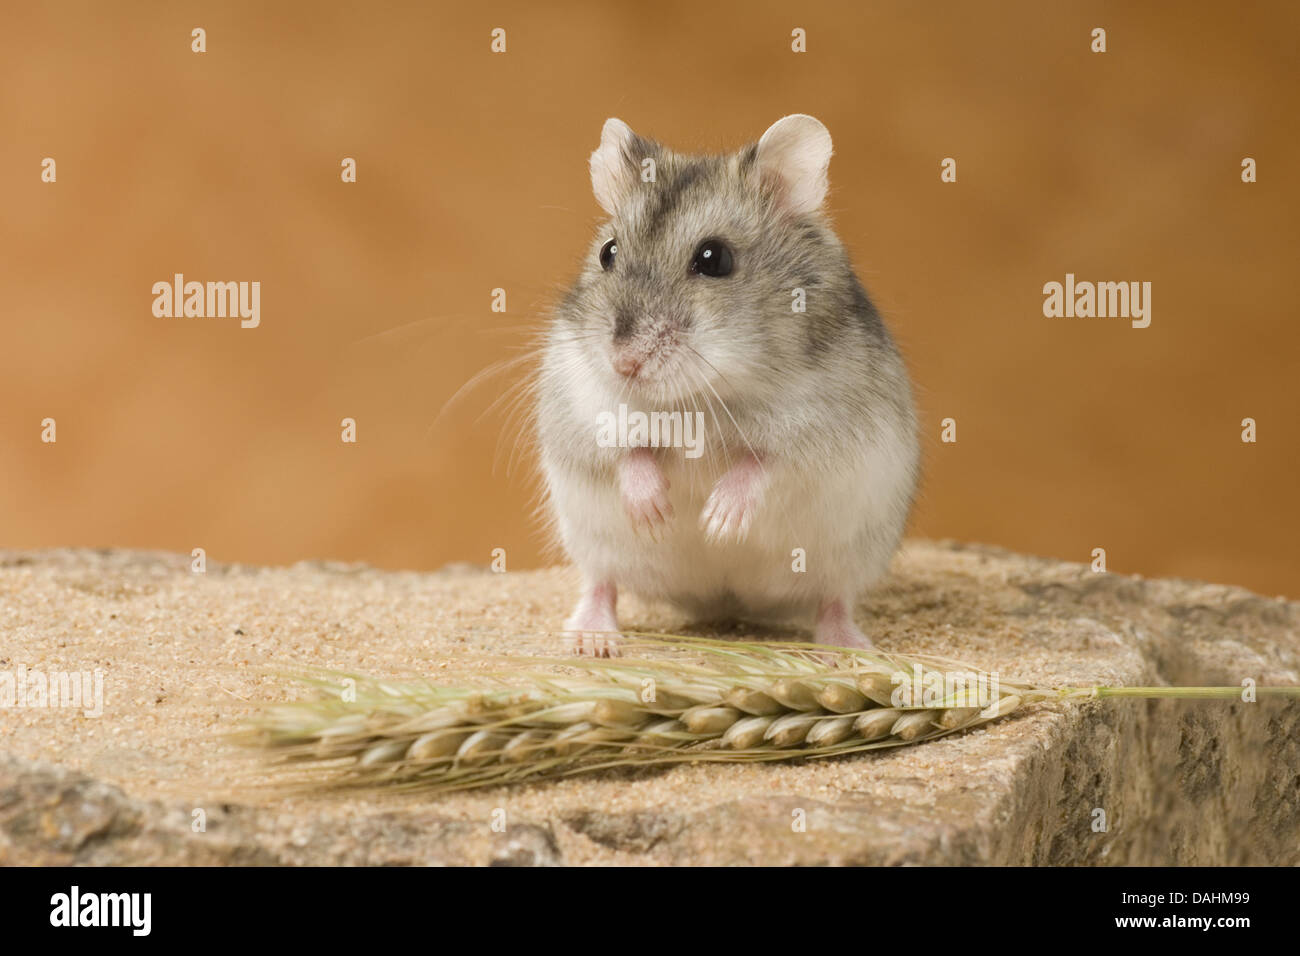 djungarian hamster, phodopus sungorus Stock Photo